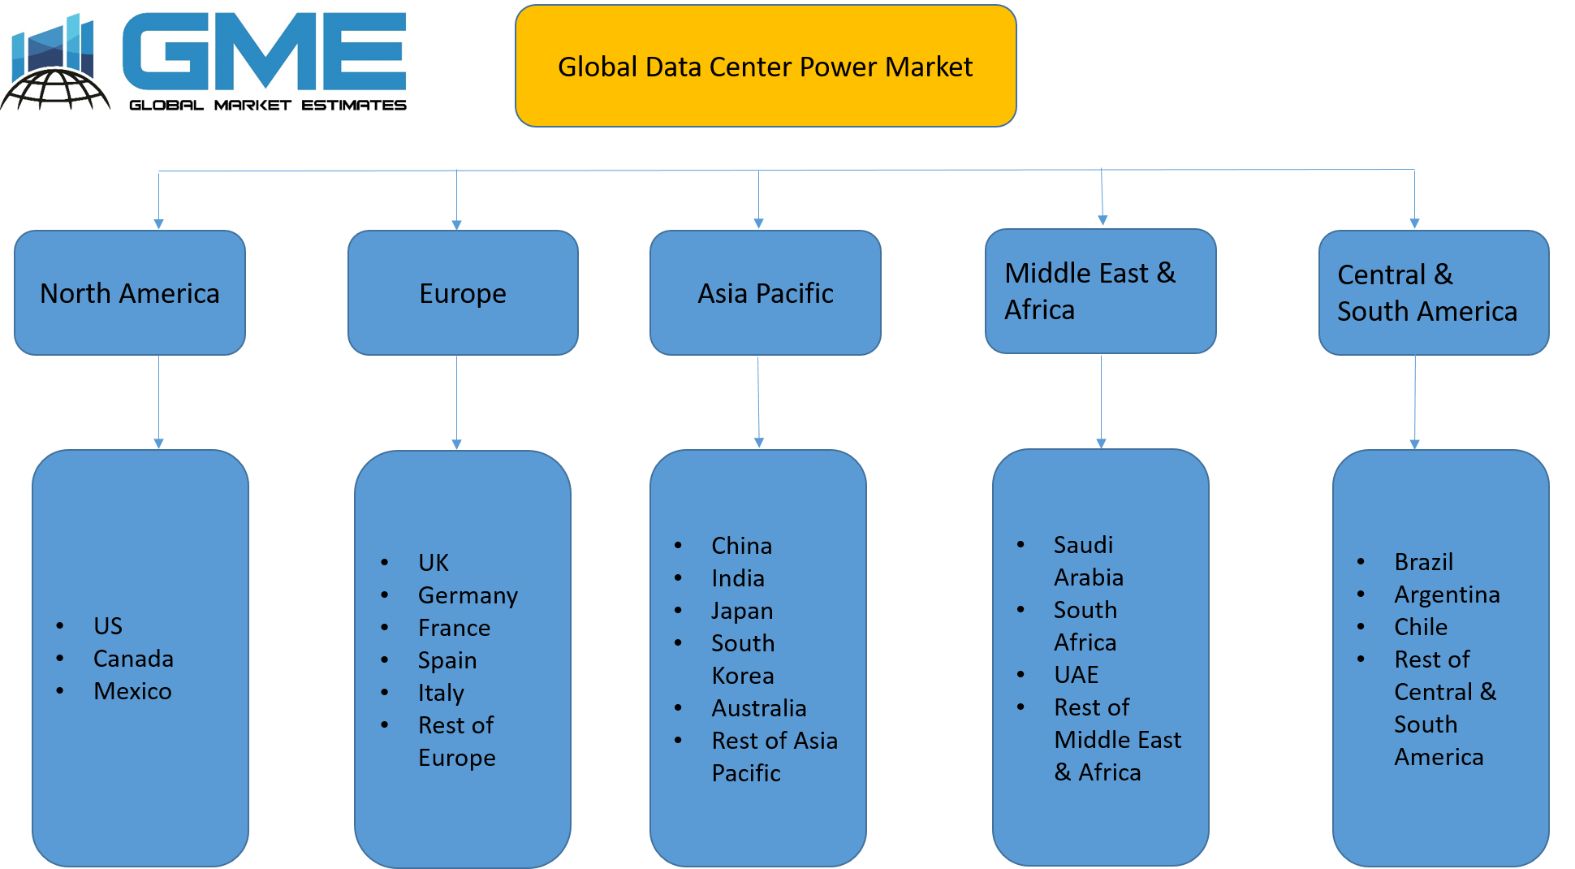 Global Data Center Power Market - Regional Analysis